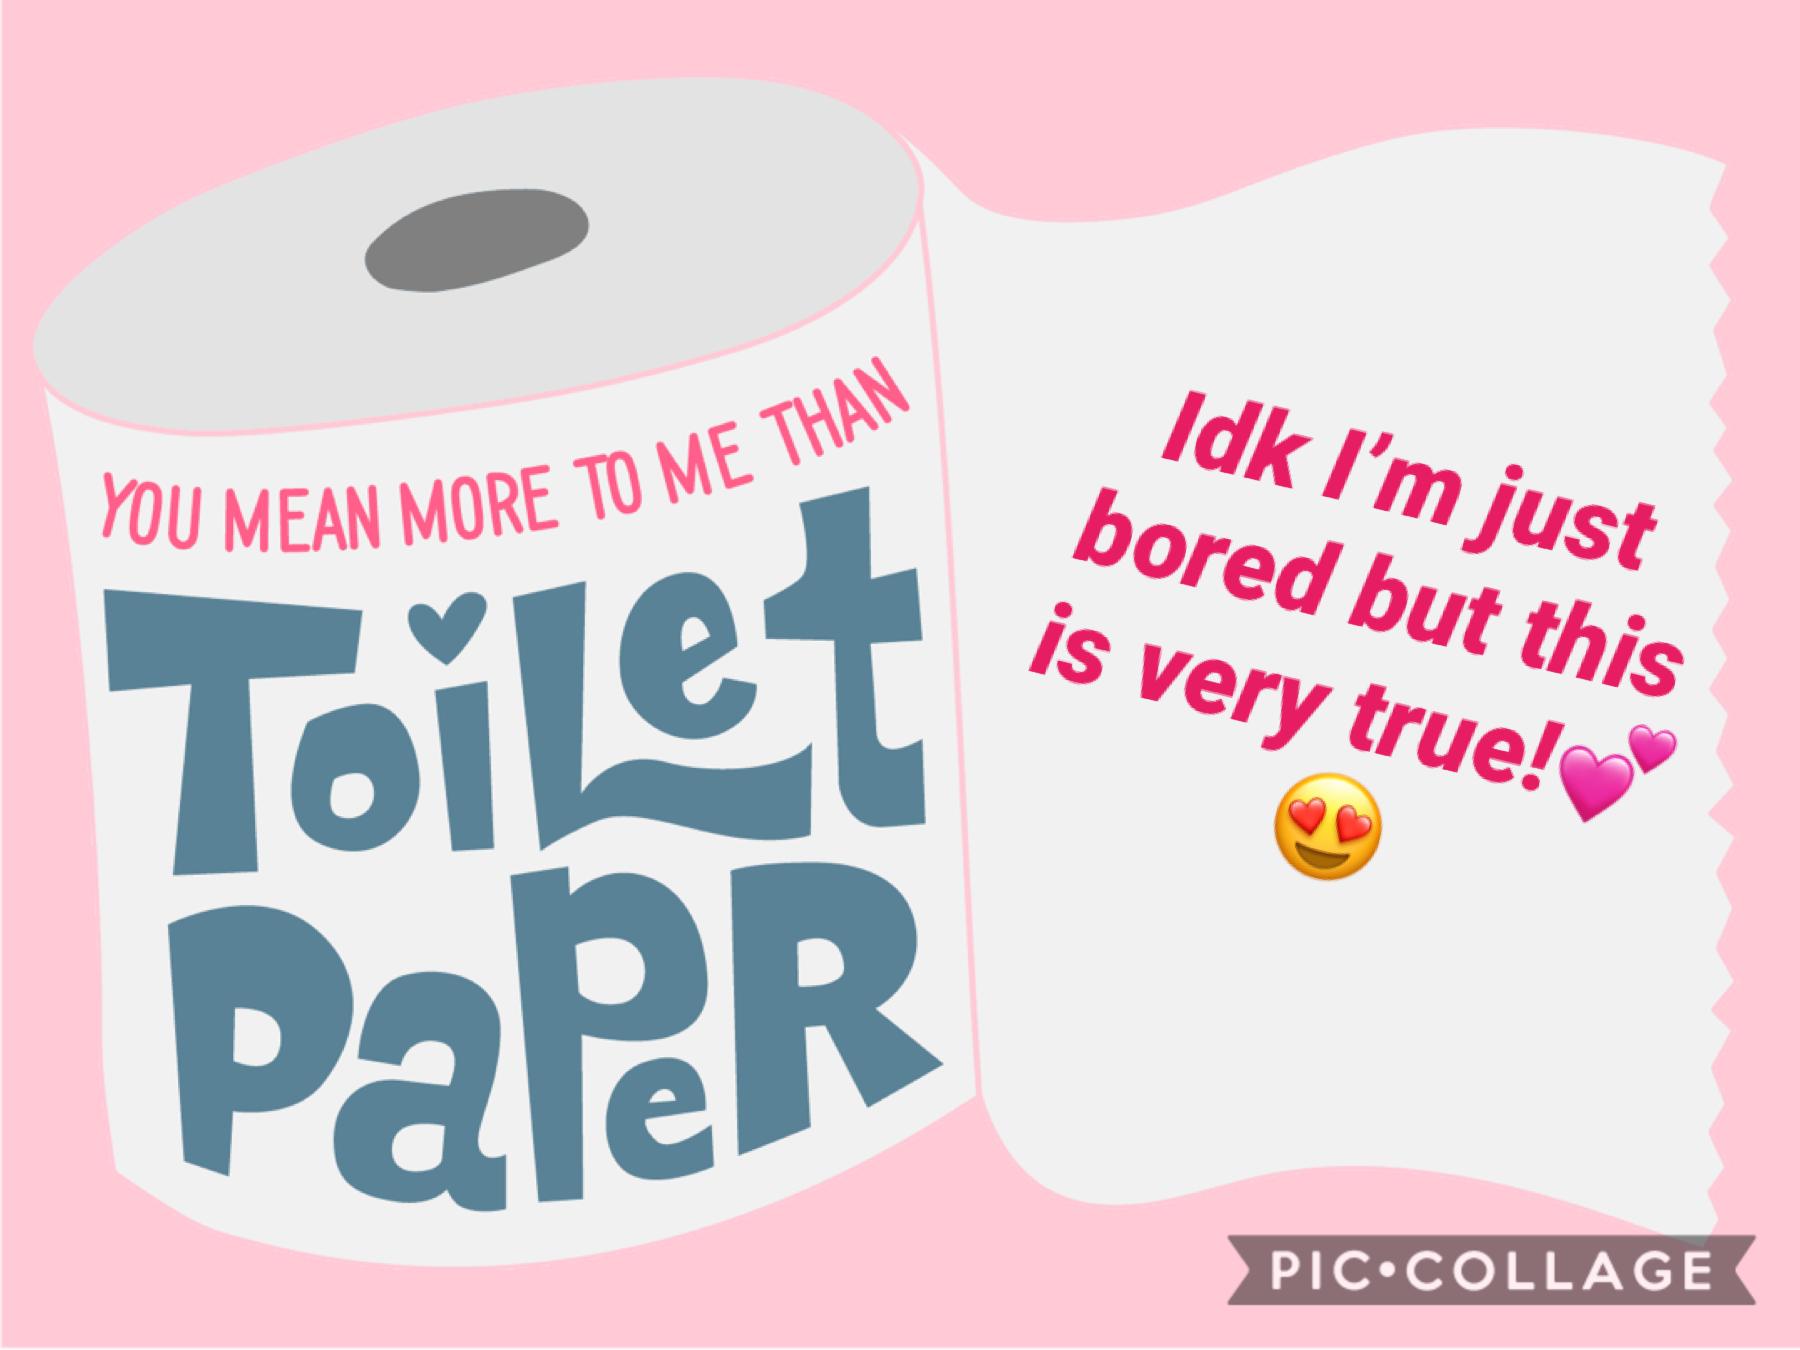 U matter to me more than toilet paper 